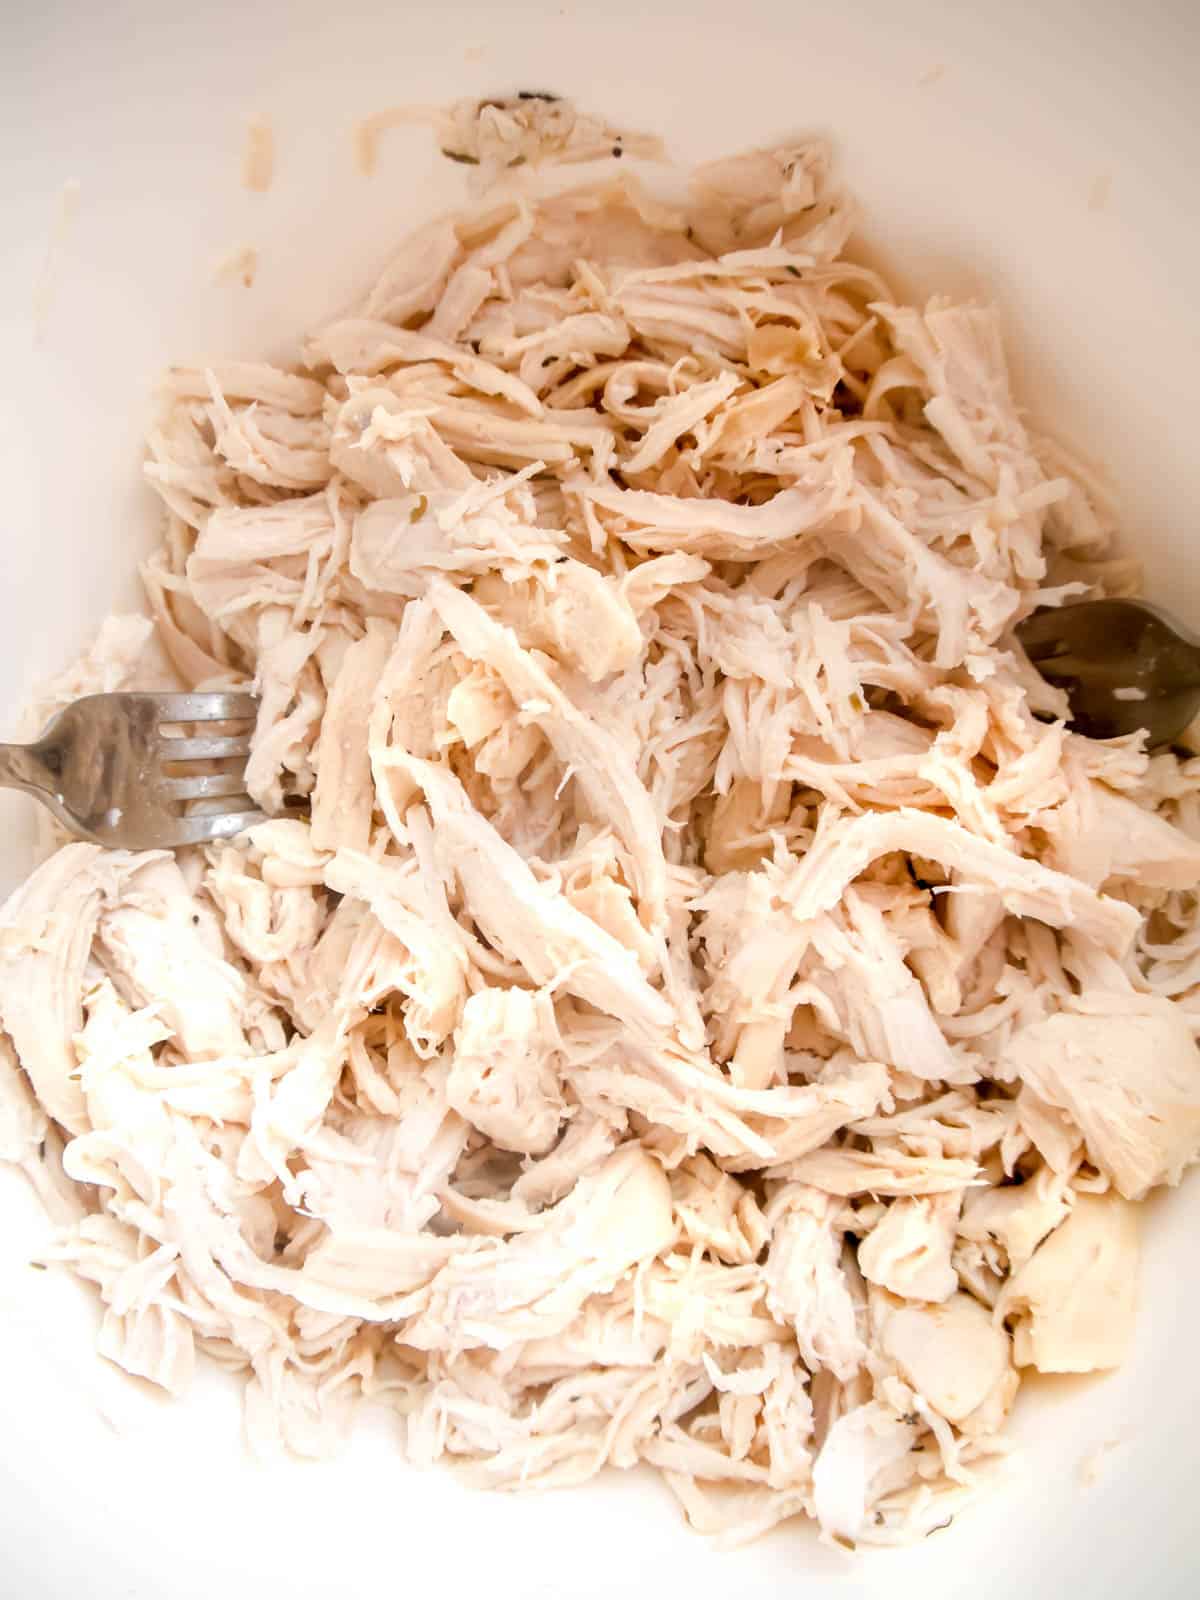 Shredded chicken in a bowl.